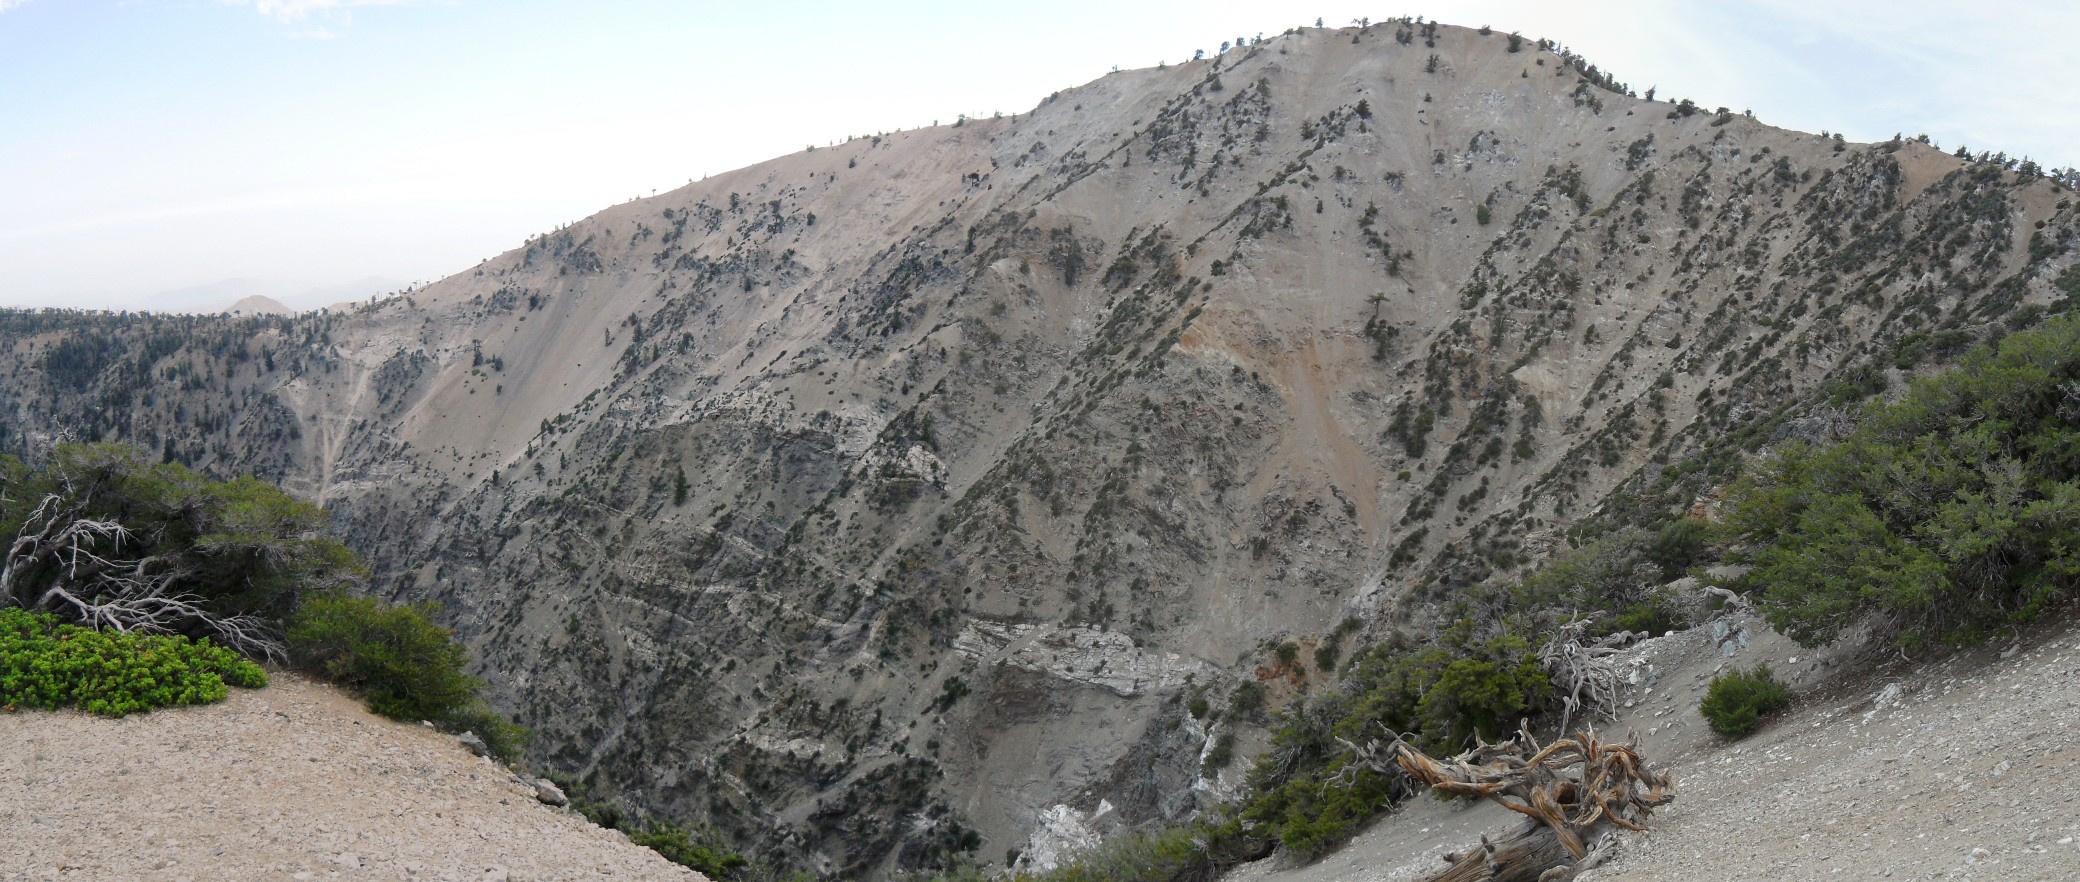 Mount Baden-Powell panorama from east ridge 4004